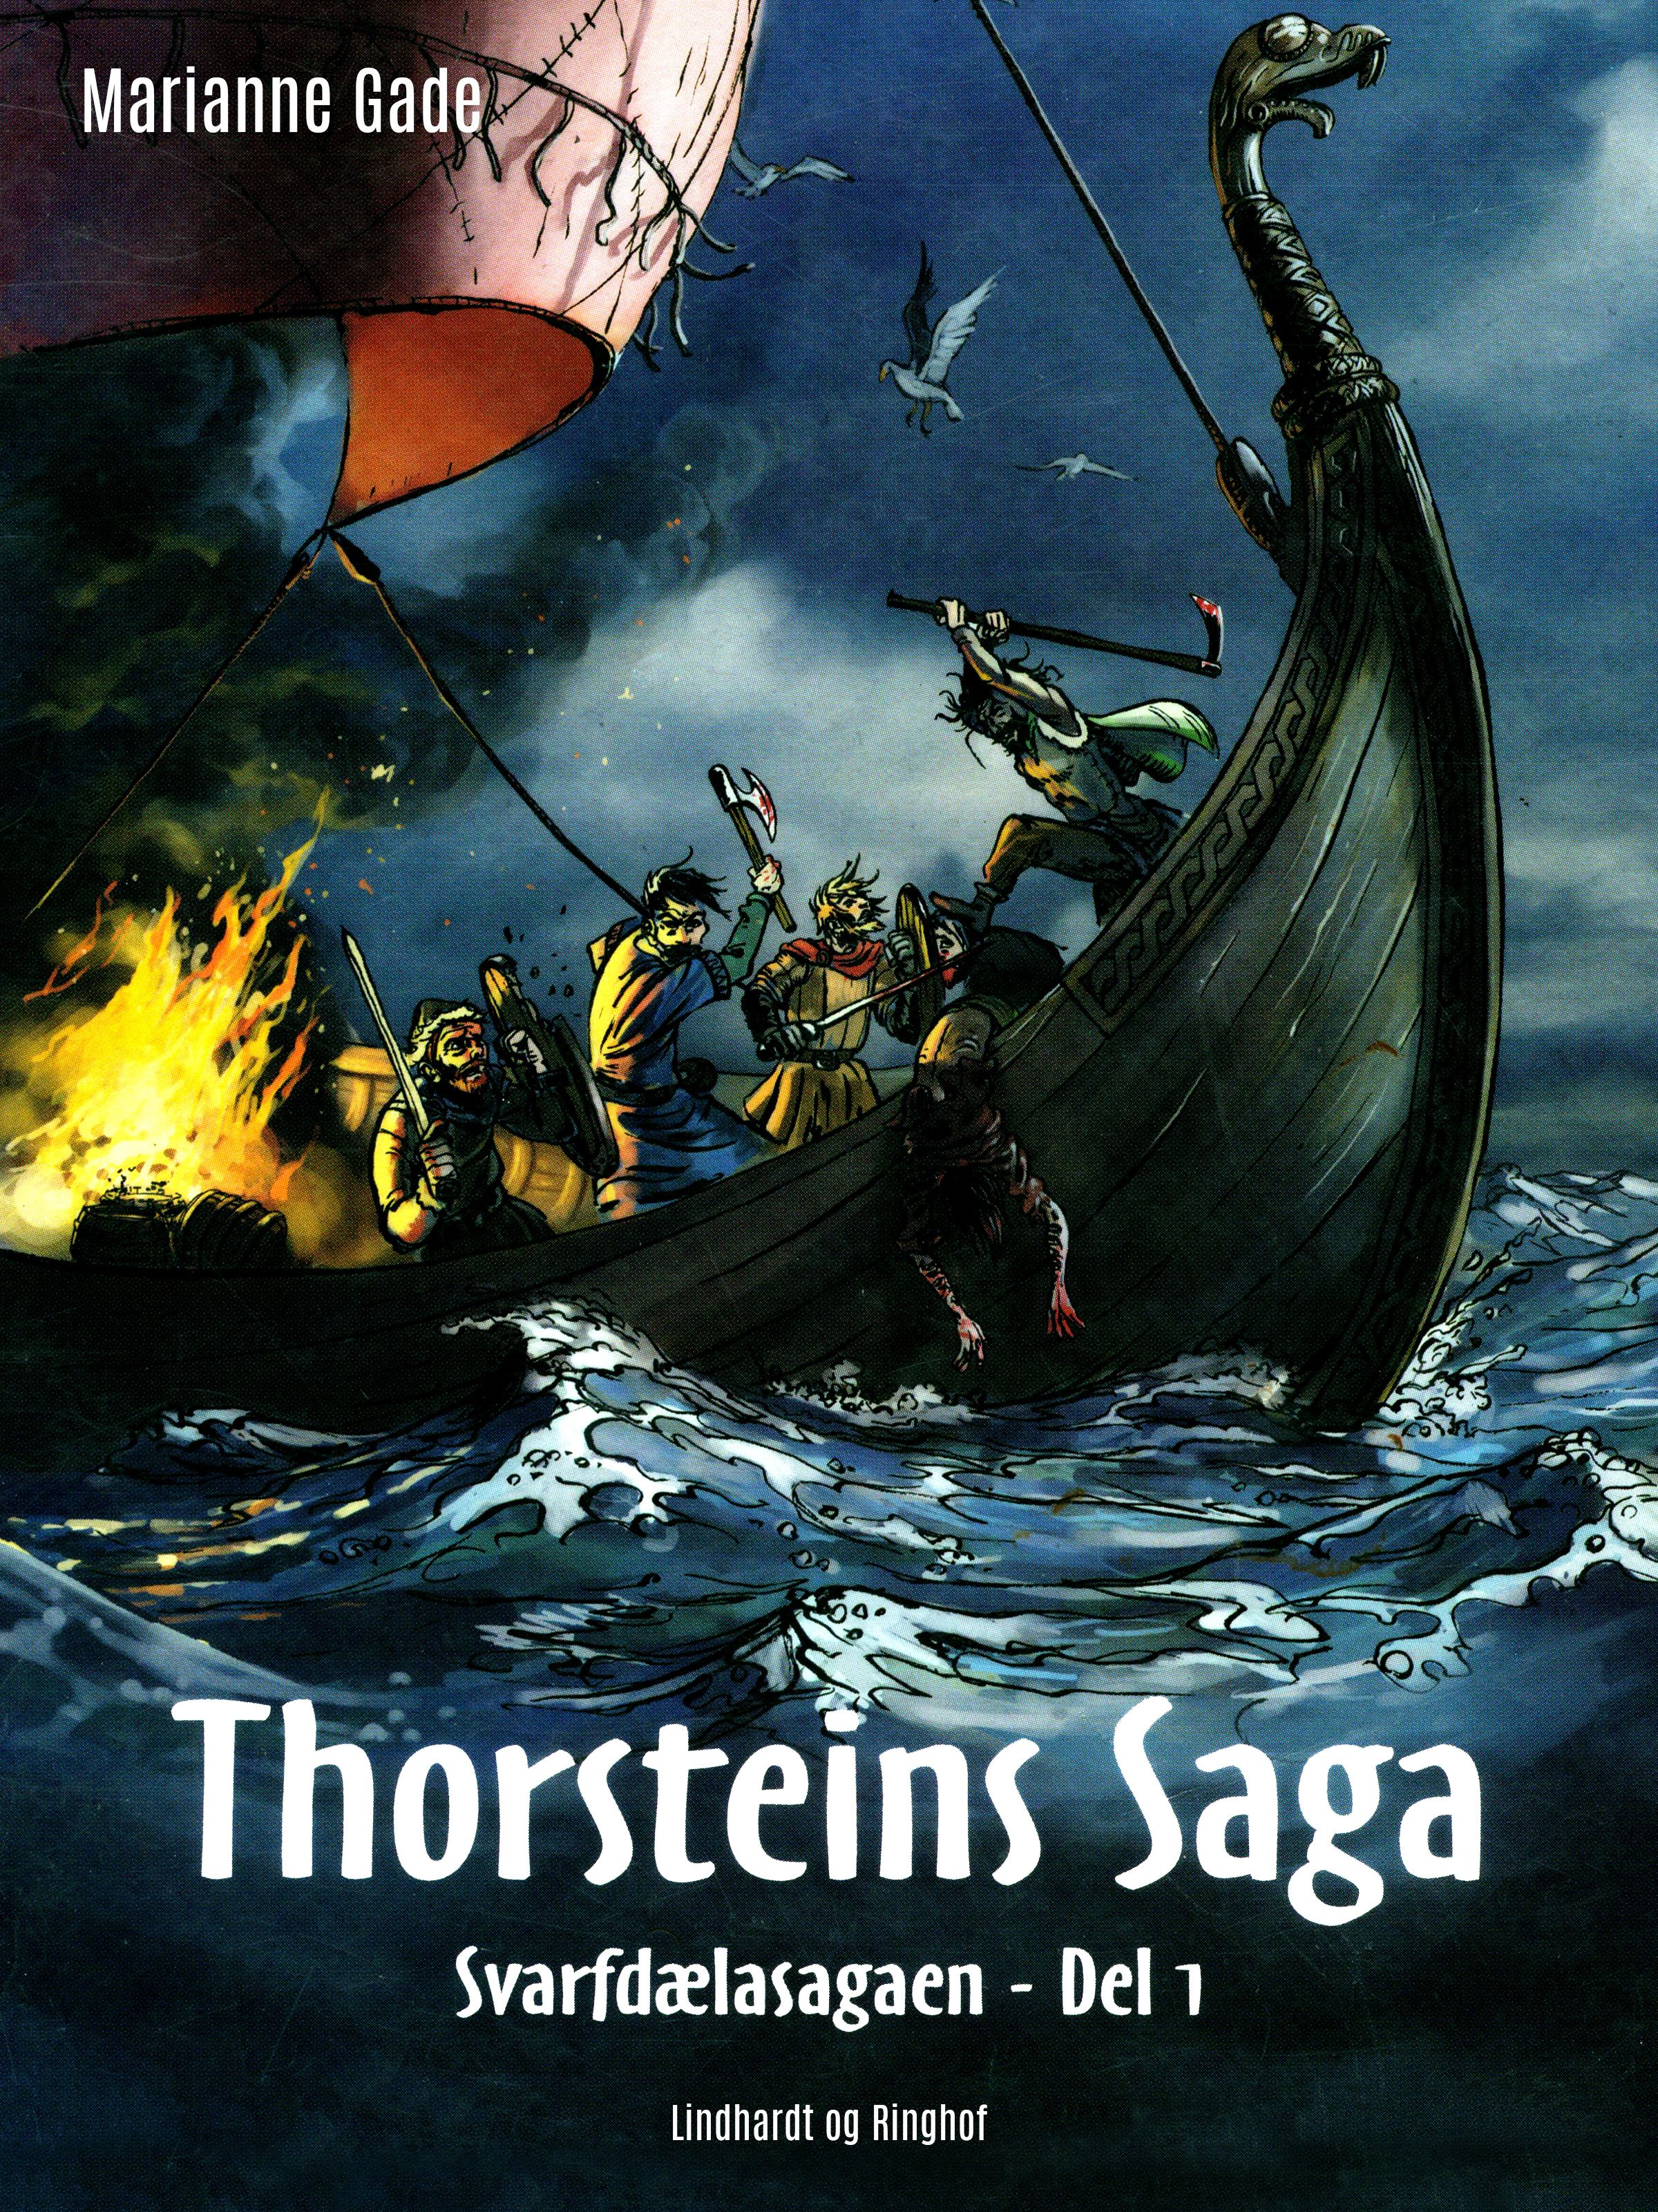 Thorsteins saga, e-bog af Marianne Gade